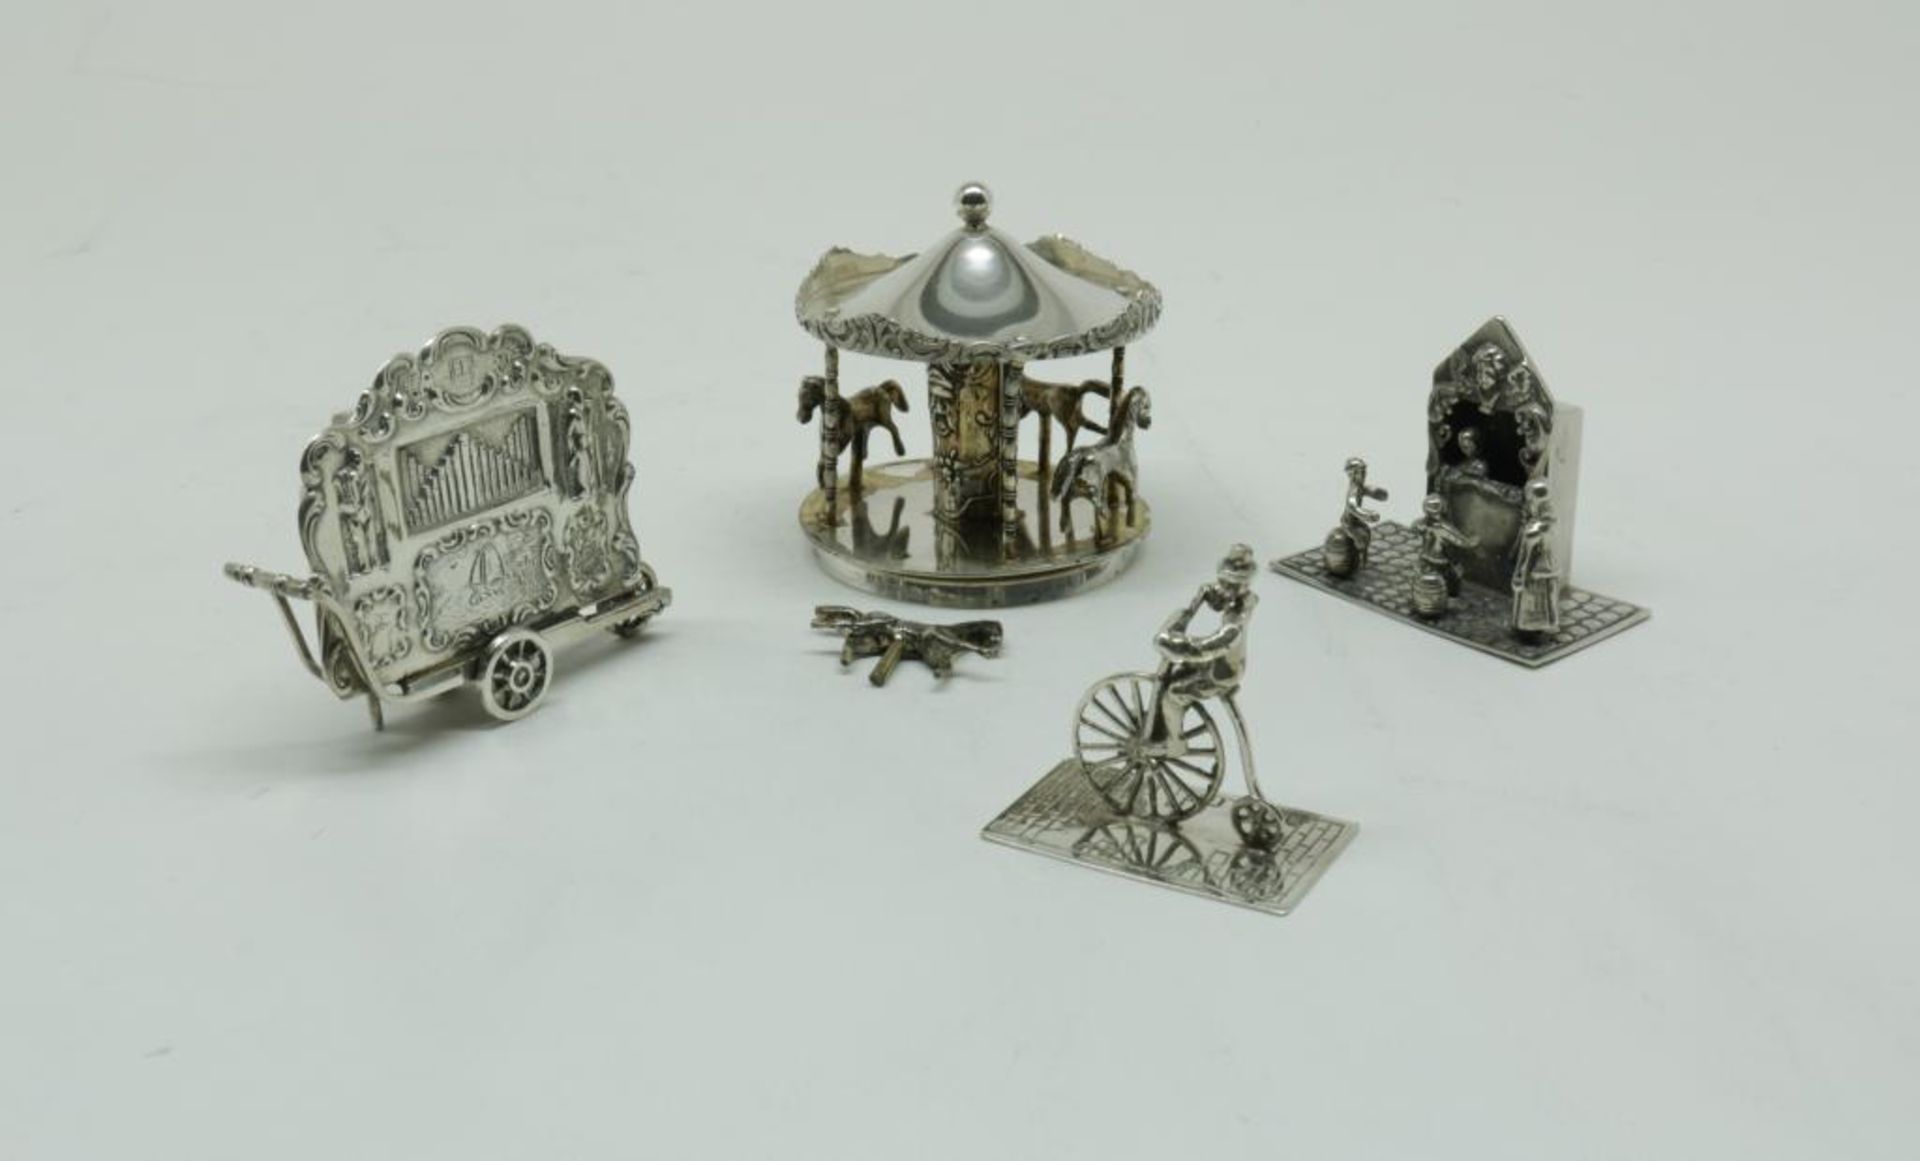 Lot div. silver miniatures, ao. a carrousel, 835/000, gross w. 178gr, one loose horse.Lot div.